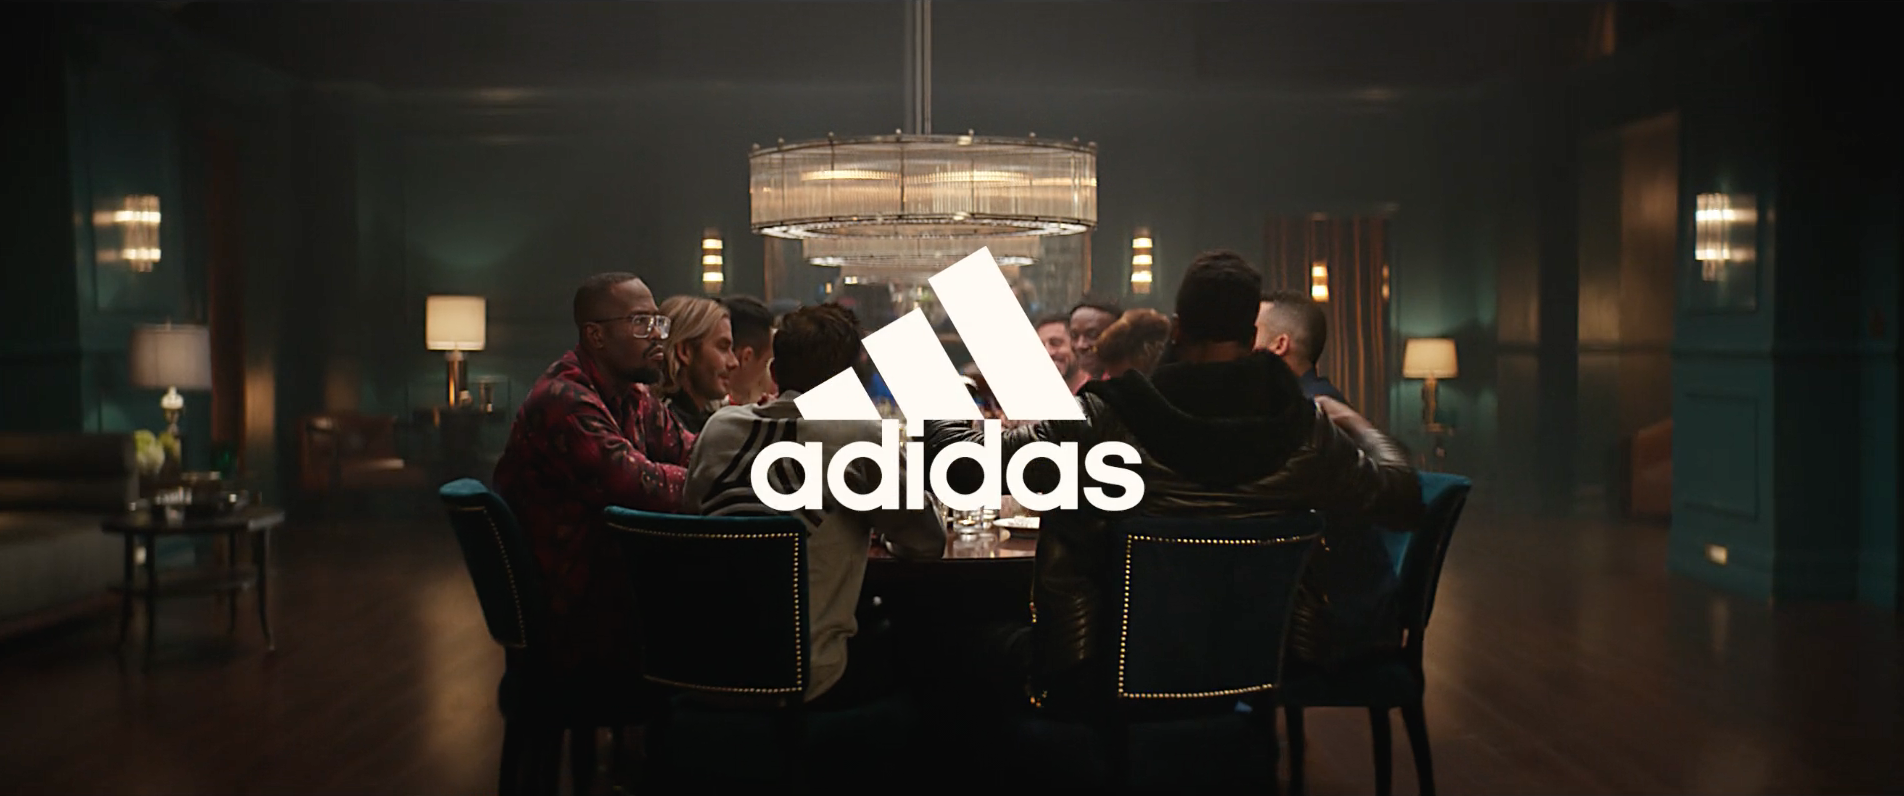 Adidas - Calling All The Creators